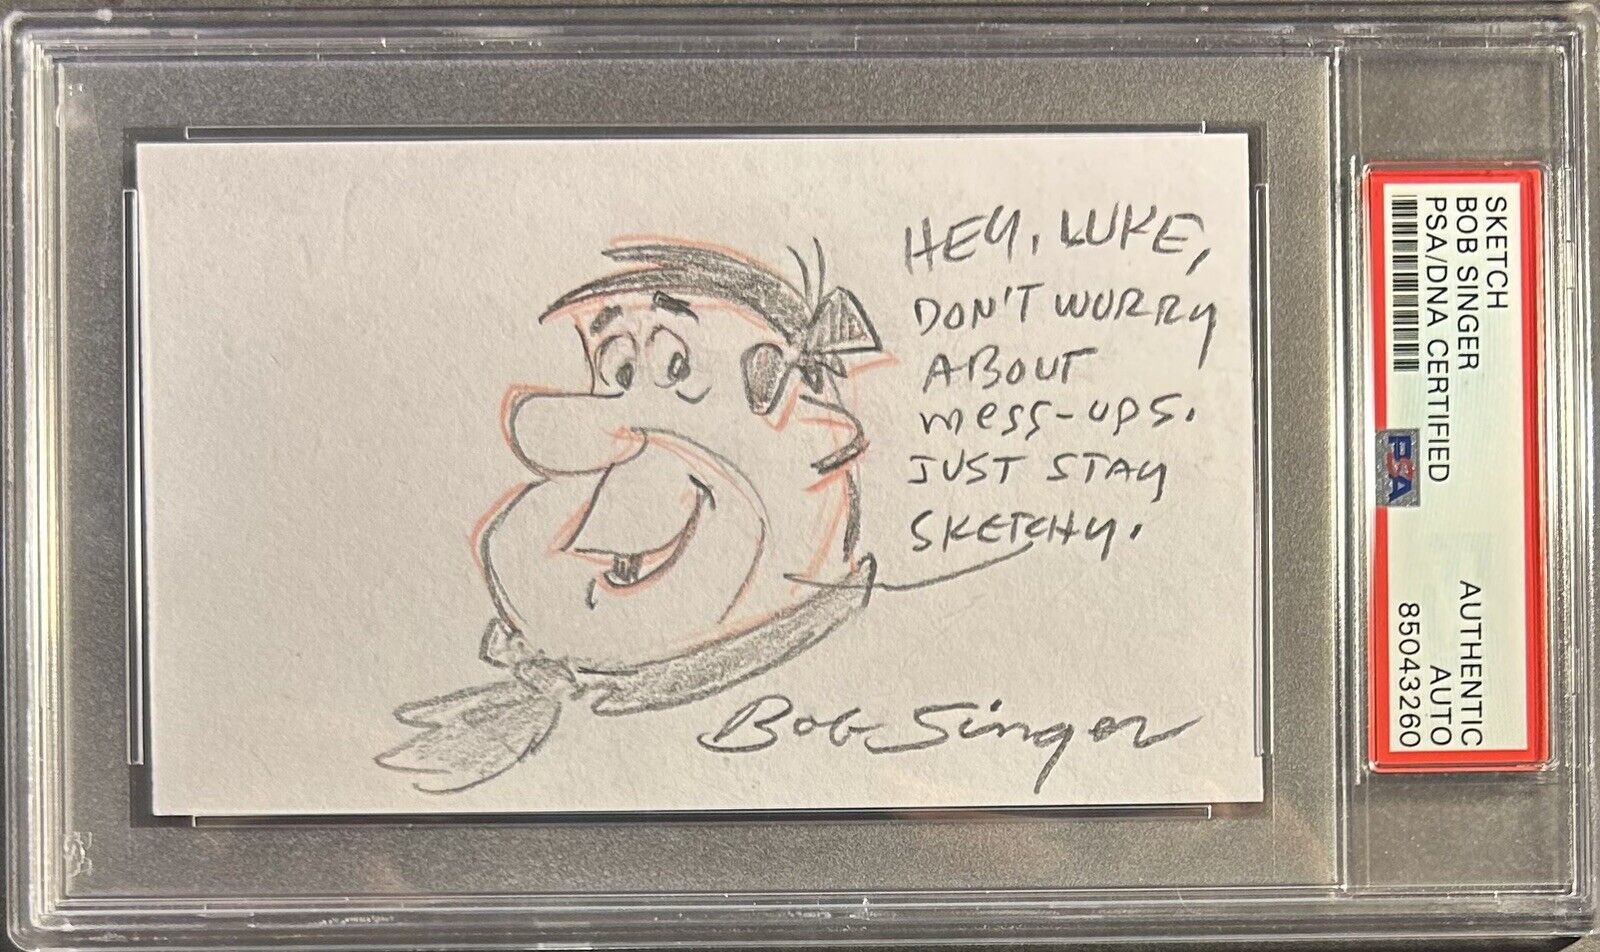 Bob Singer Sketch PSA/DNA Hand Drawn 